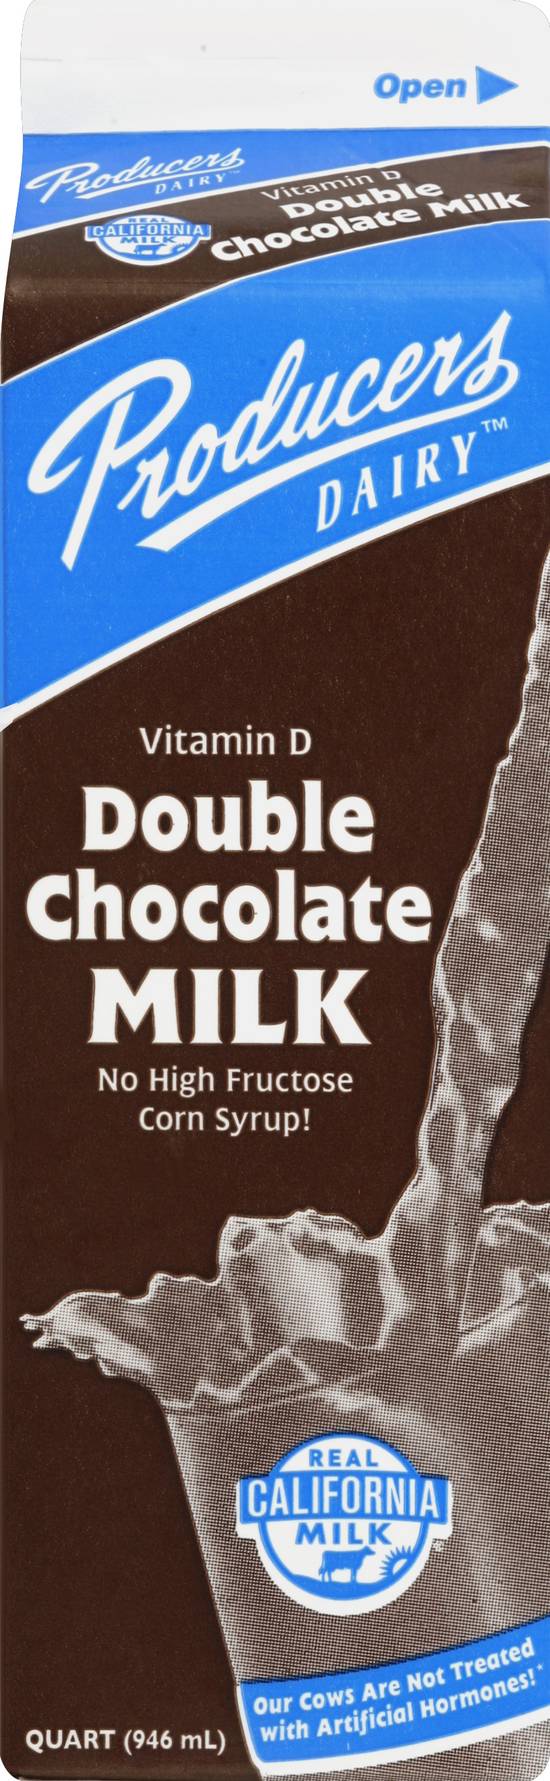 Producers Vitamin D Milk (1 qt) (double chocolate)